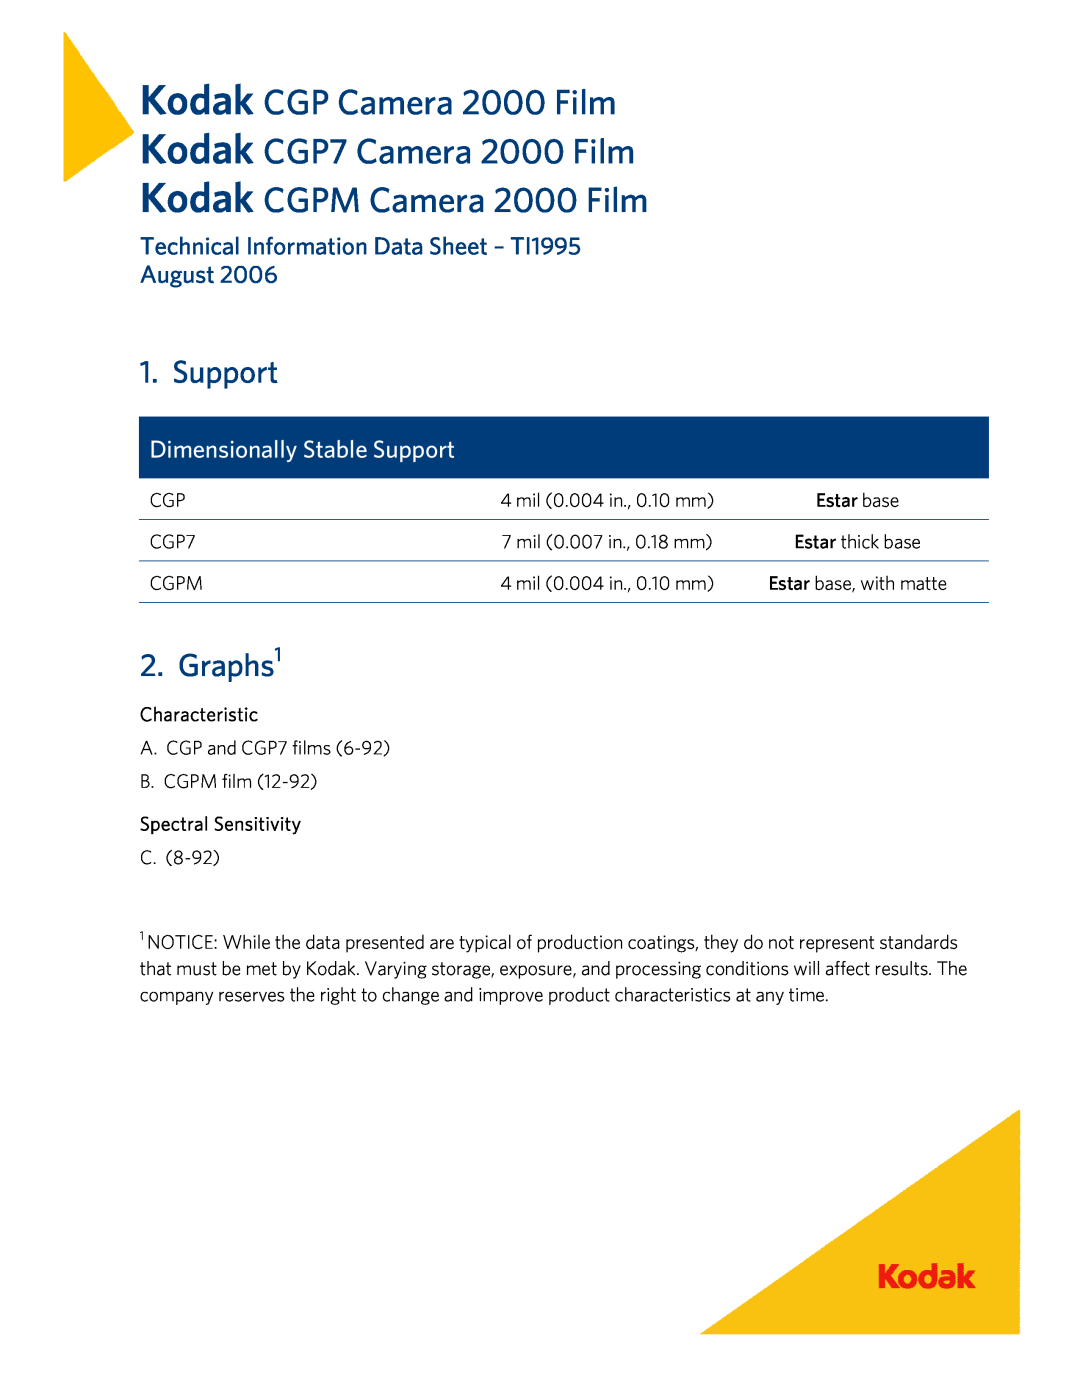 Kodak CGP7, CGPM Graphs1, Technical Information Data Sheet - TI1995 August, Dimensionally Stable Support, Cgpm 